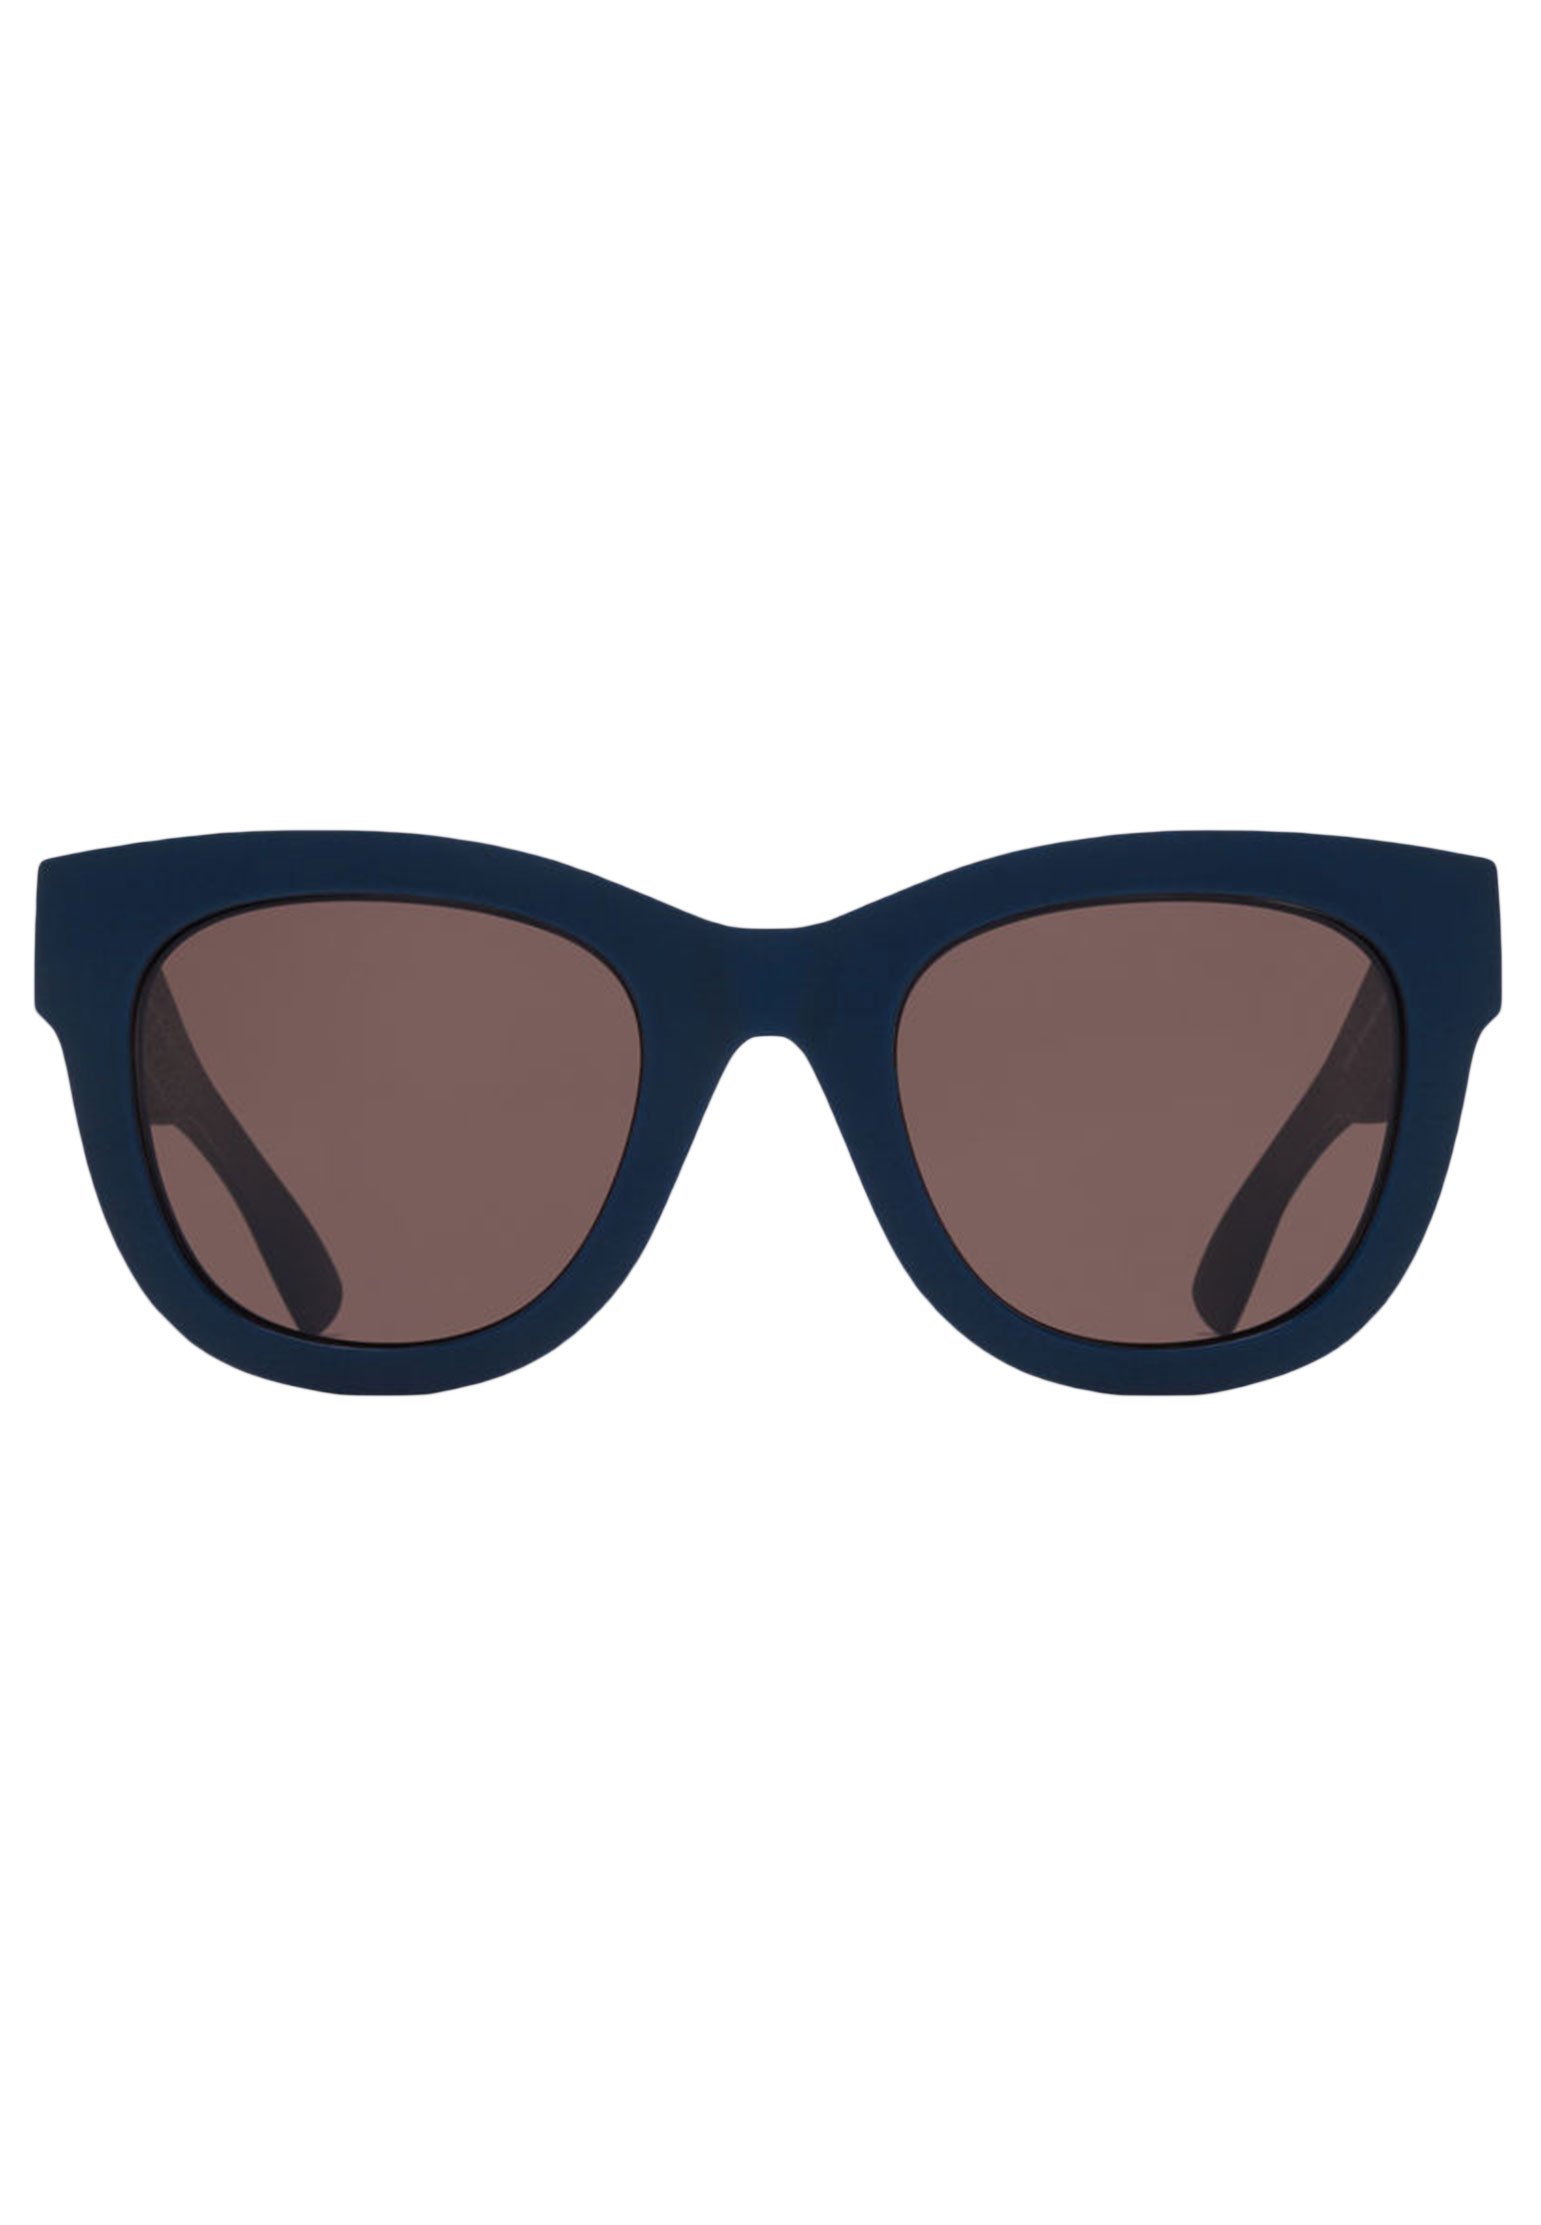 Sunglasses MYKITA Color: brown (Code: 228) in online store Allure